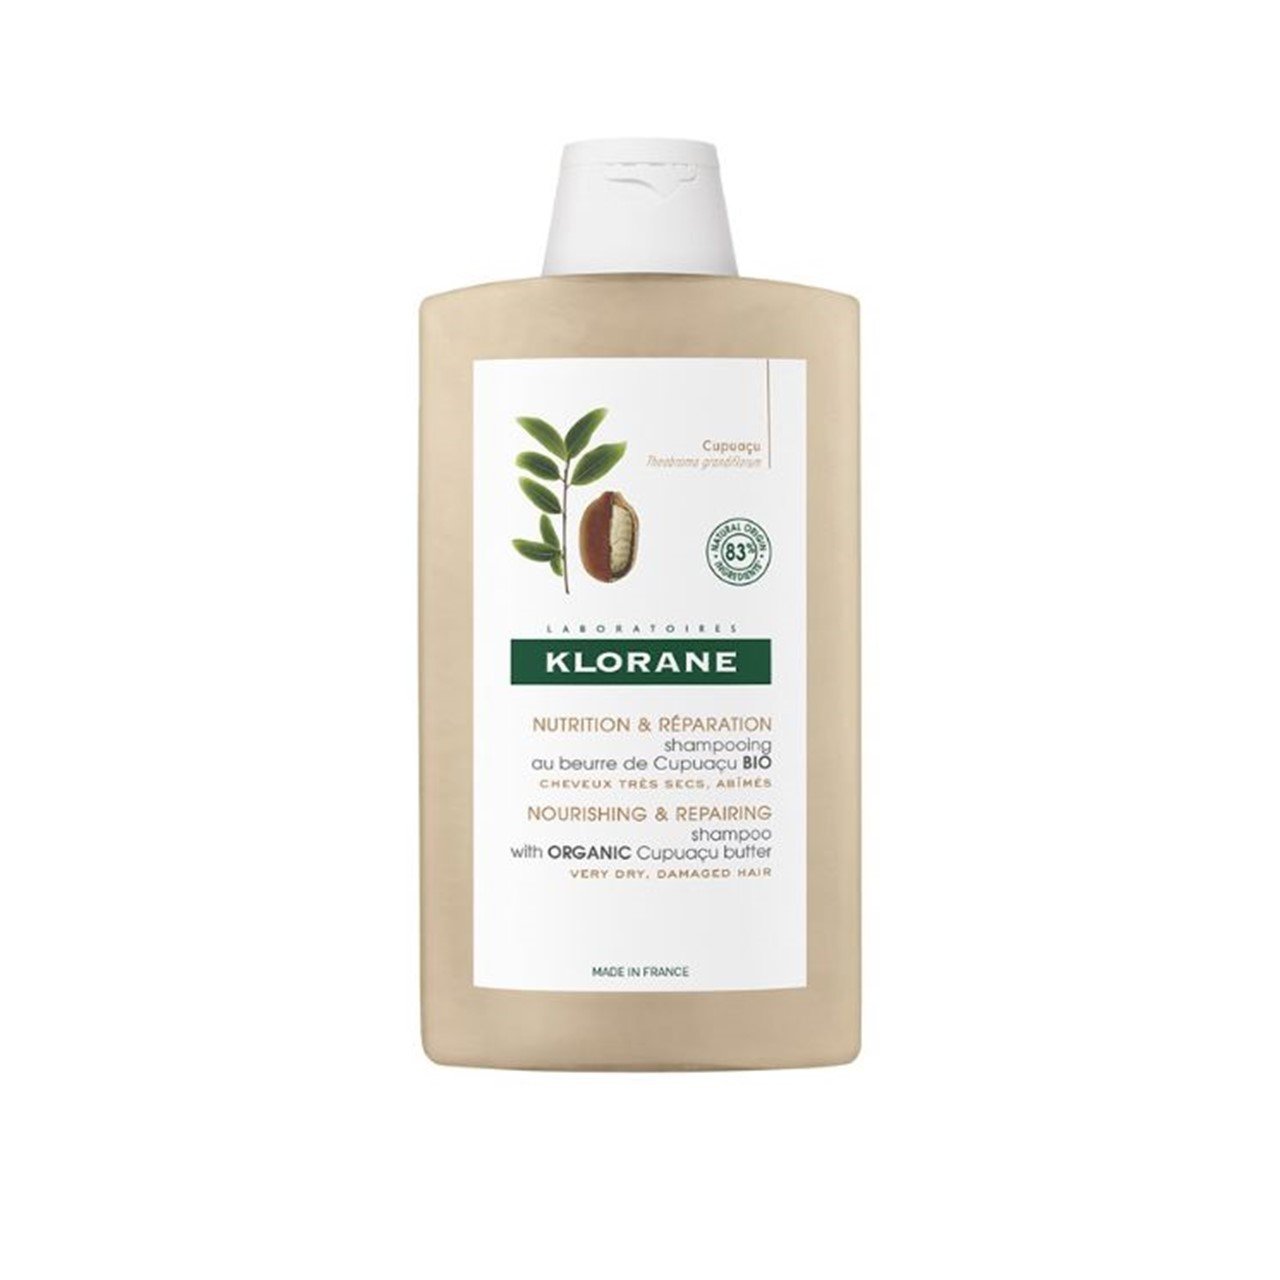 Klorane Nourishing & Repairing Organic Cupuaçu Butter Shampoo 400ml (13.53fl oz)